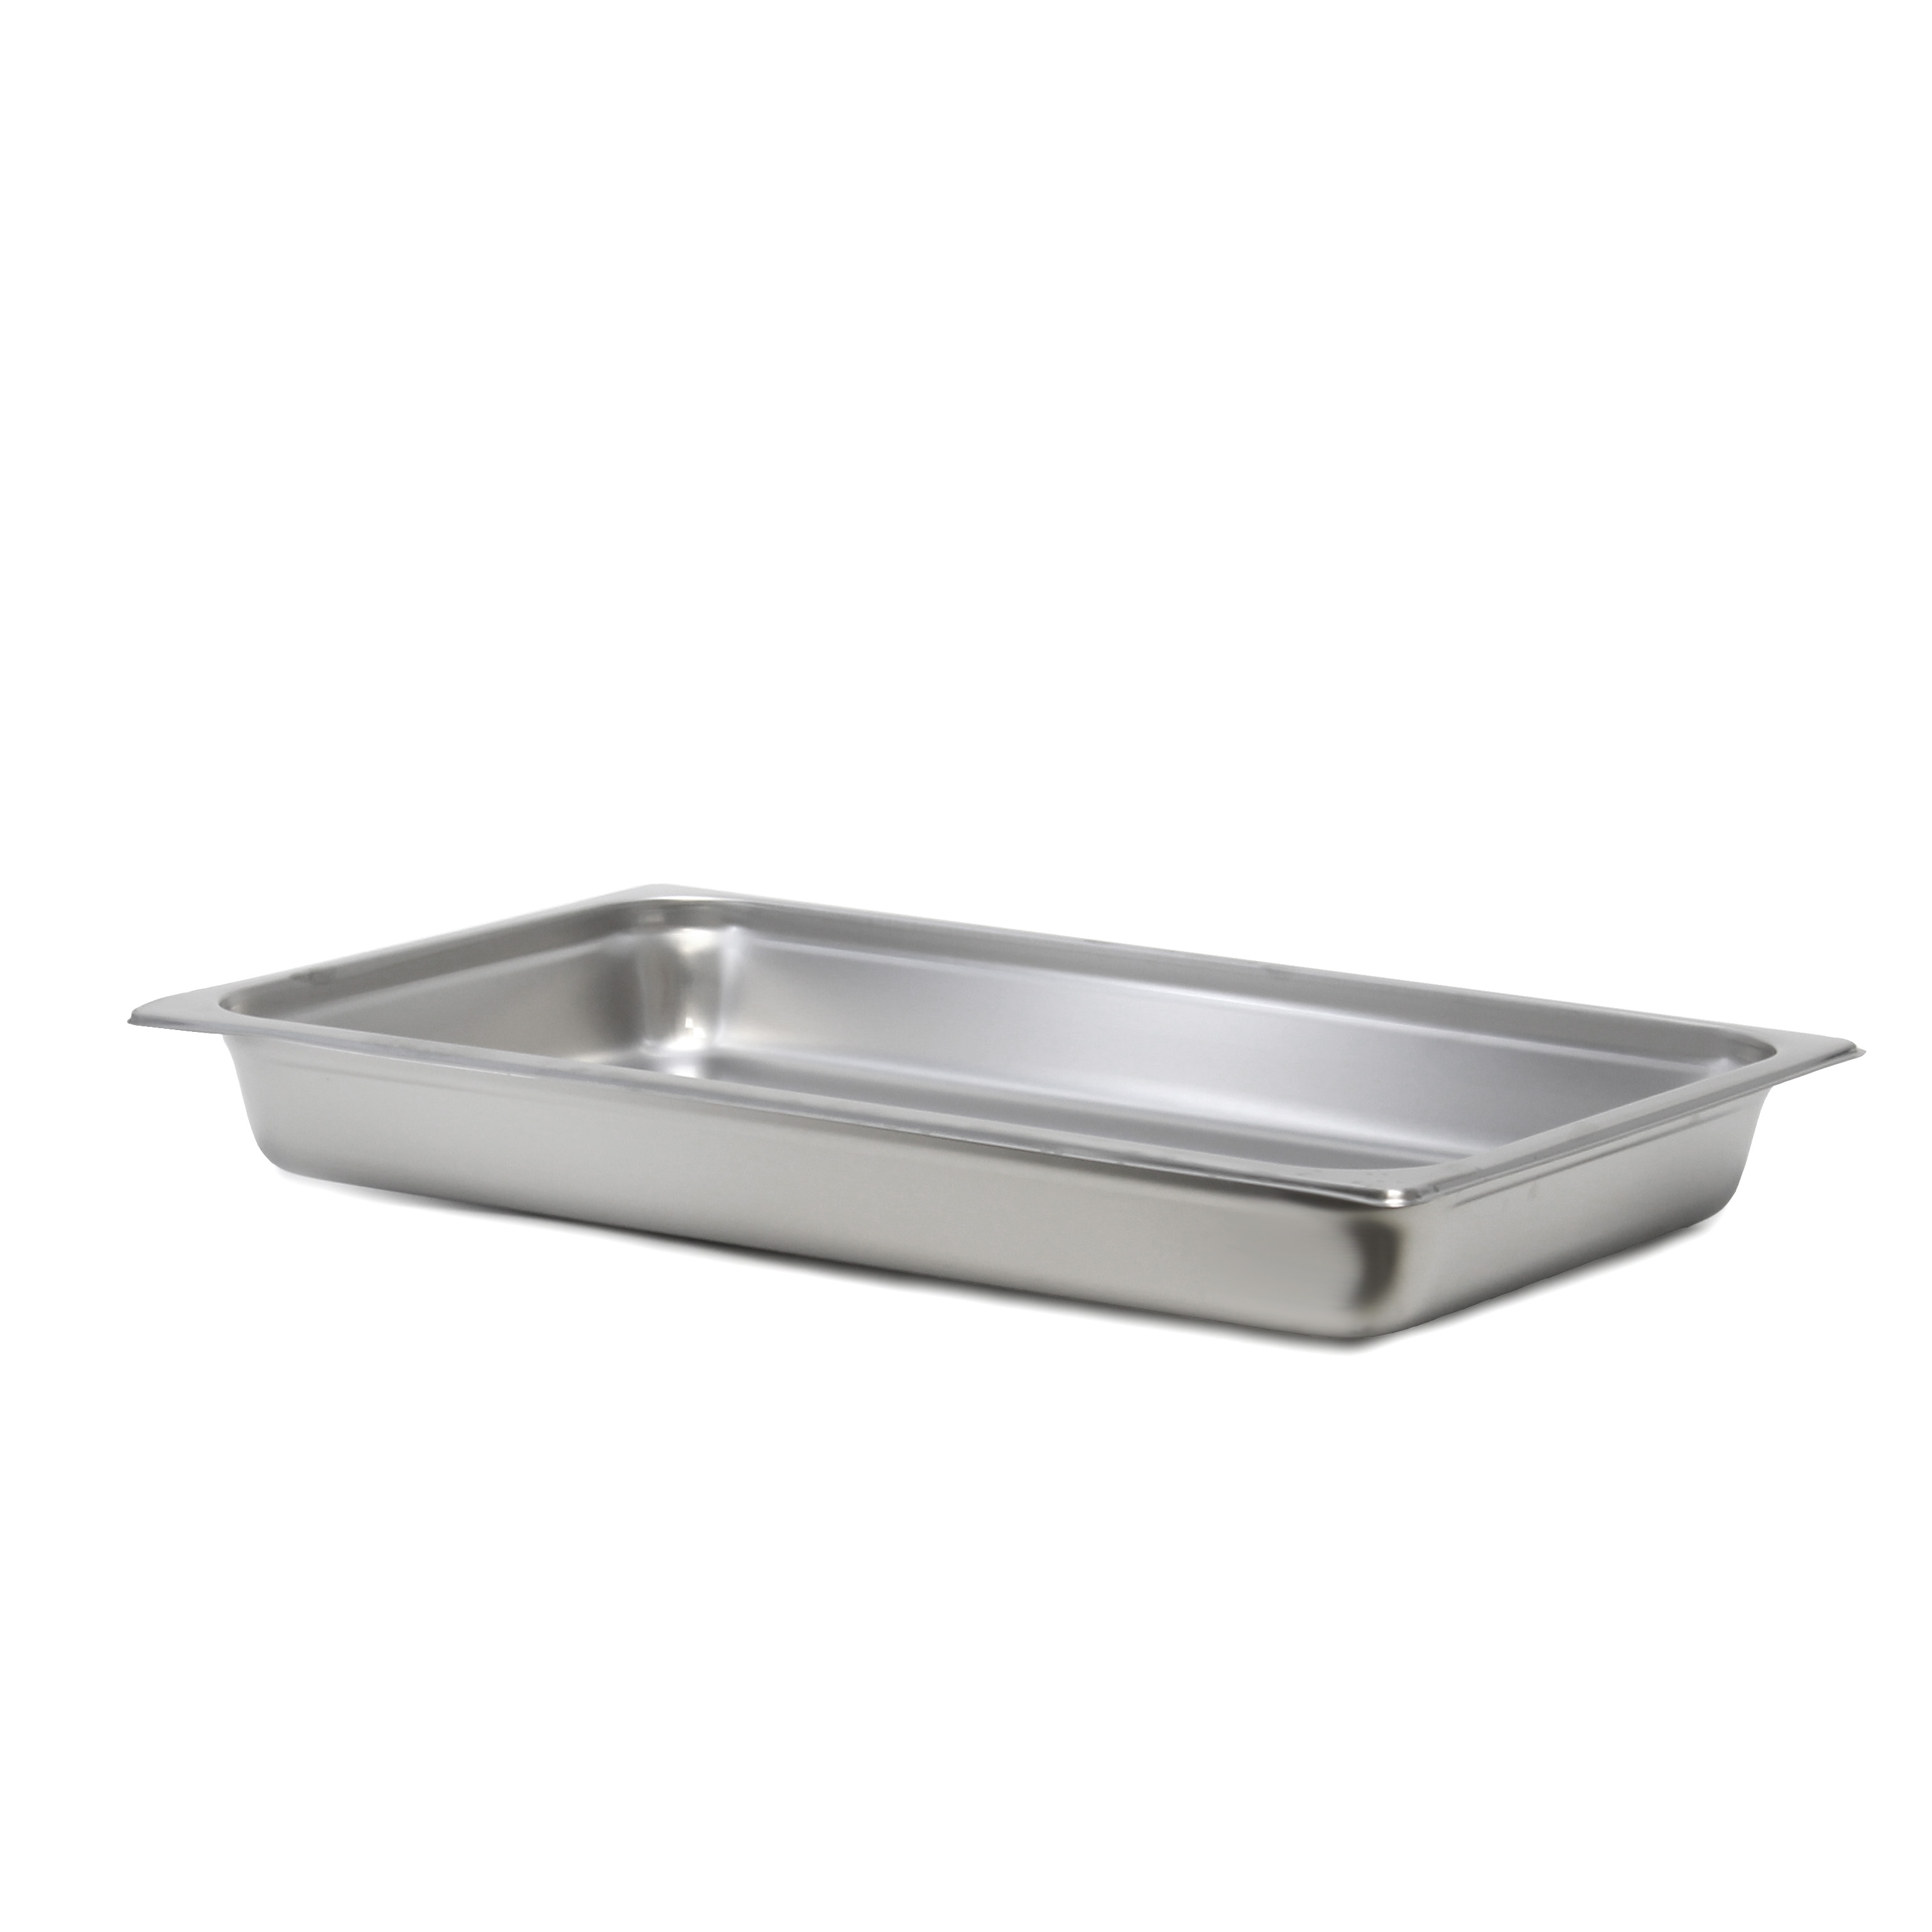 SignatureWares® Stainless Steel Steam Table Pan, Full Size, 2.5" - STEAMPAN002SignatureWares® Stainless Steel Steam Table Pan, Full Size, 2.5" - STEAMPAN002